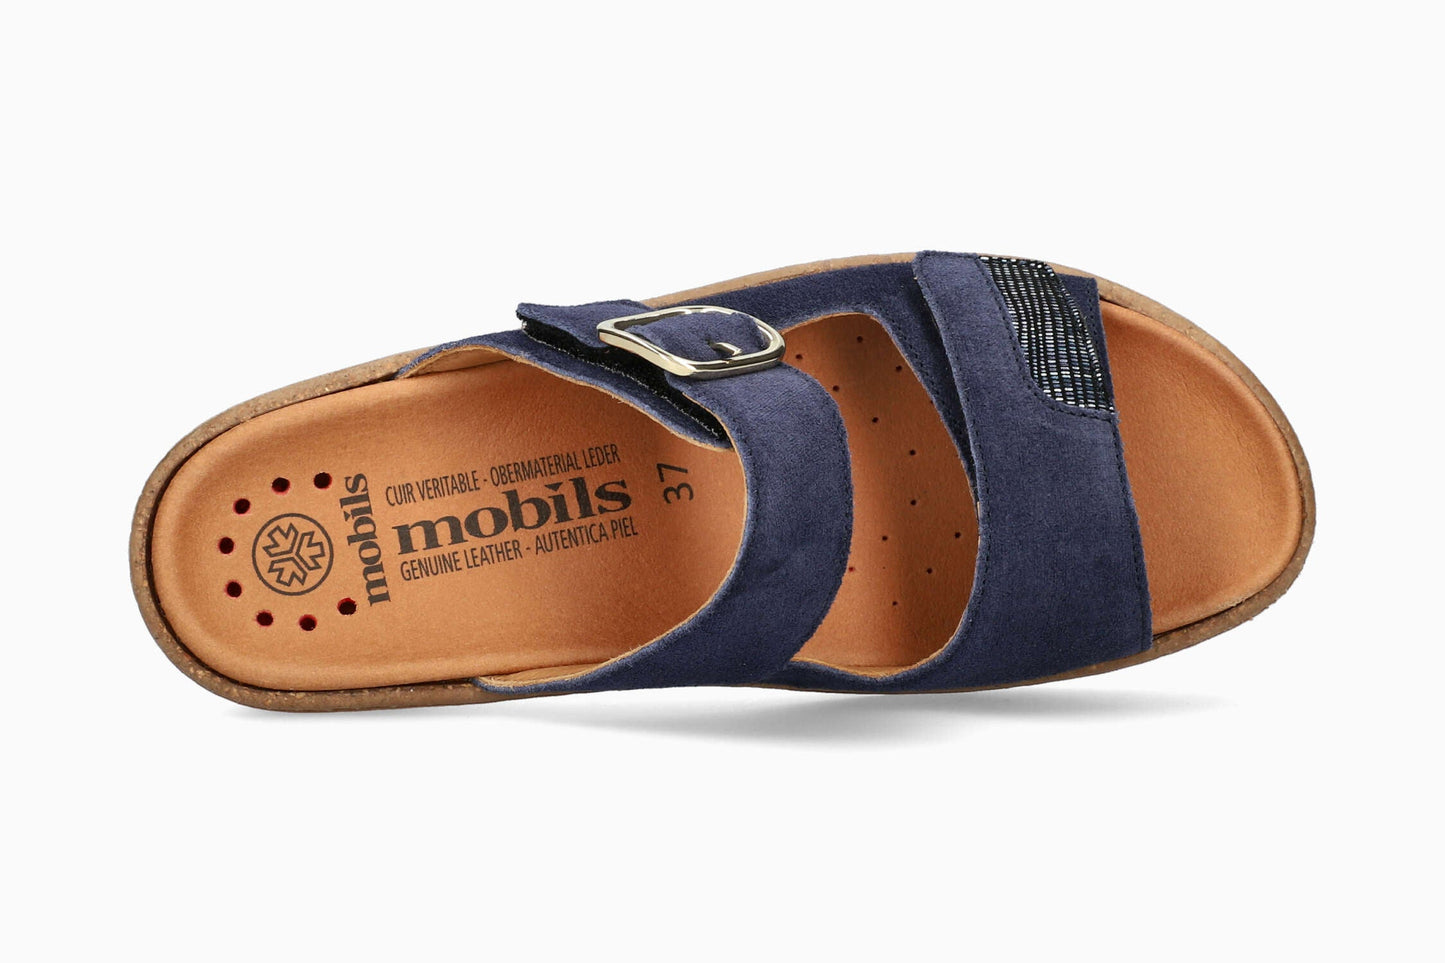 Mobils Randya Indigo Women's Sandal Top